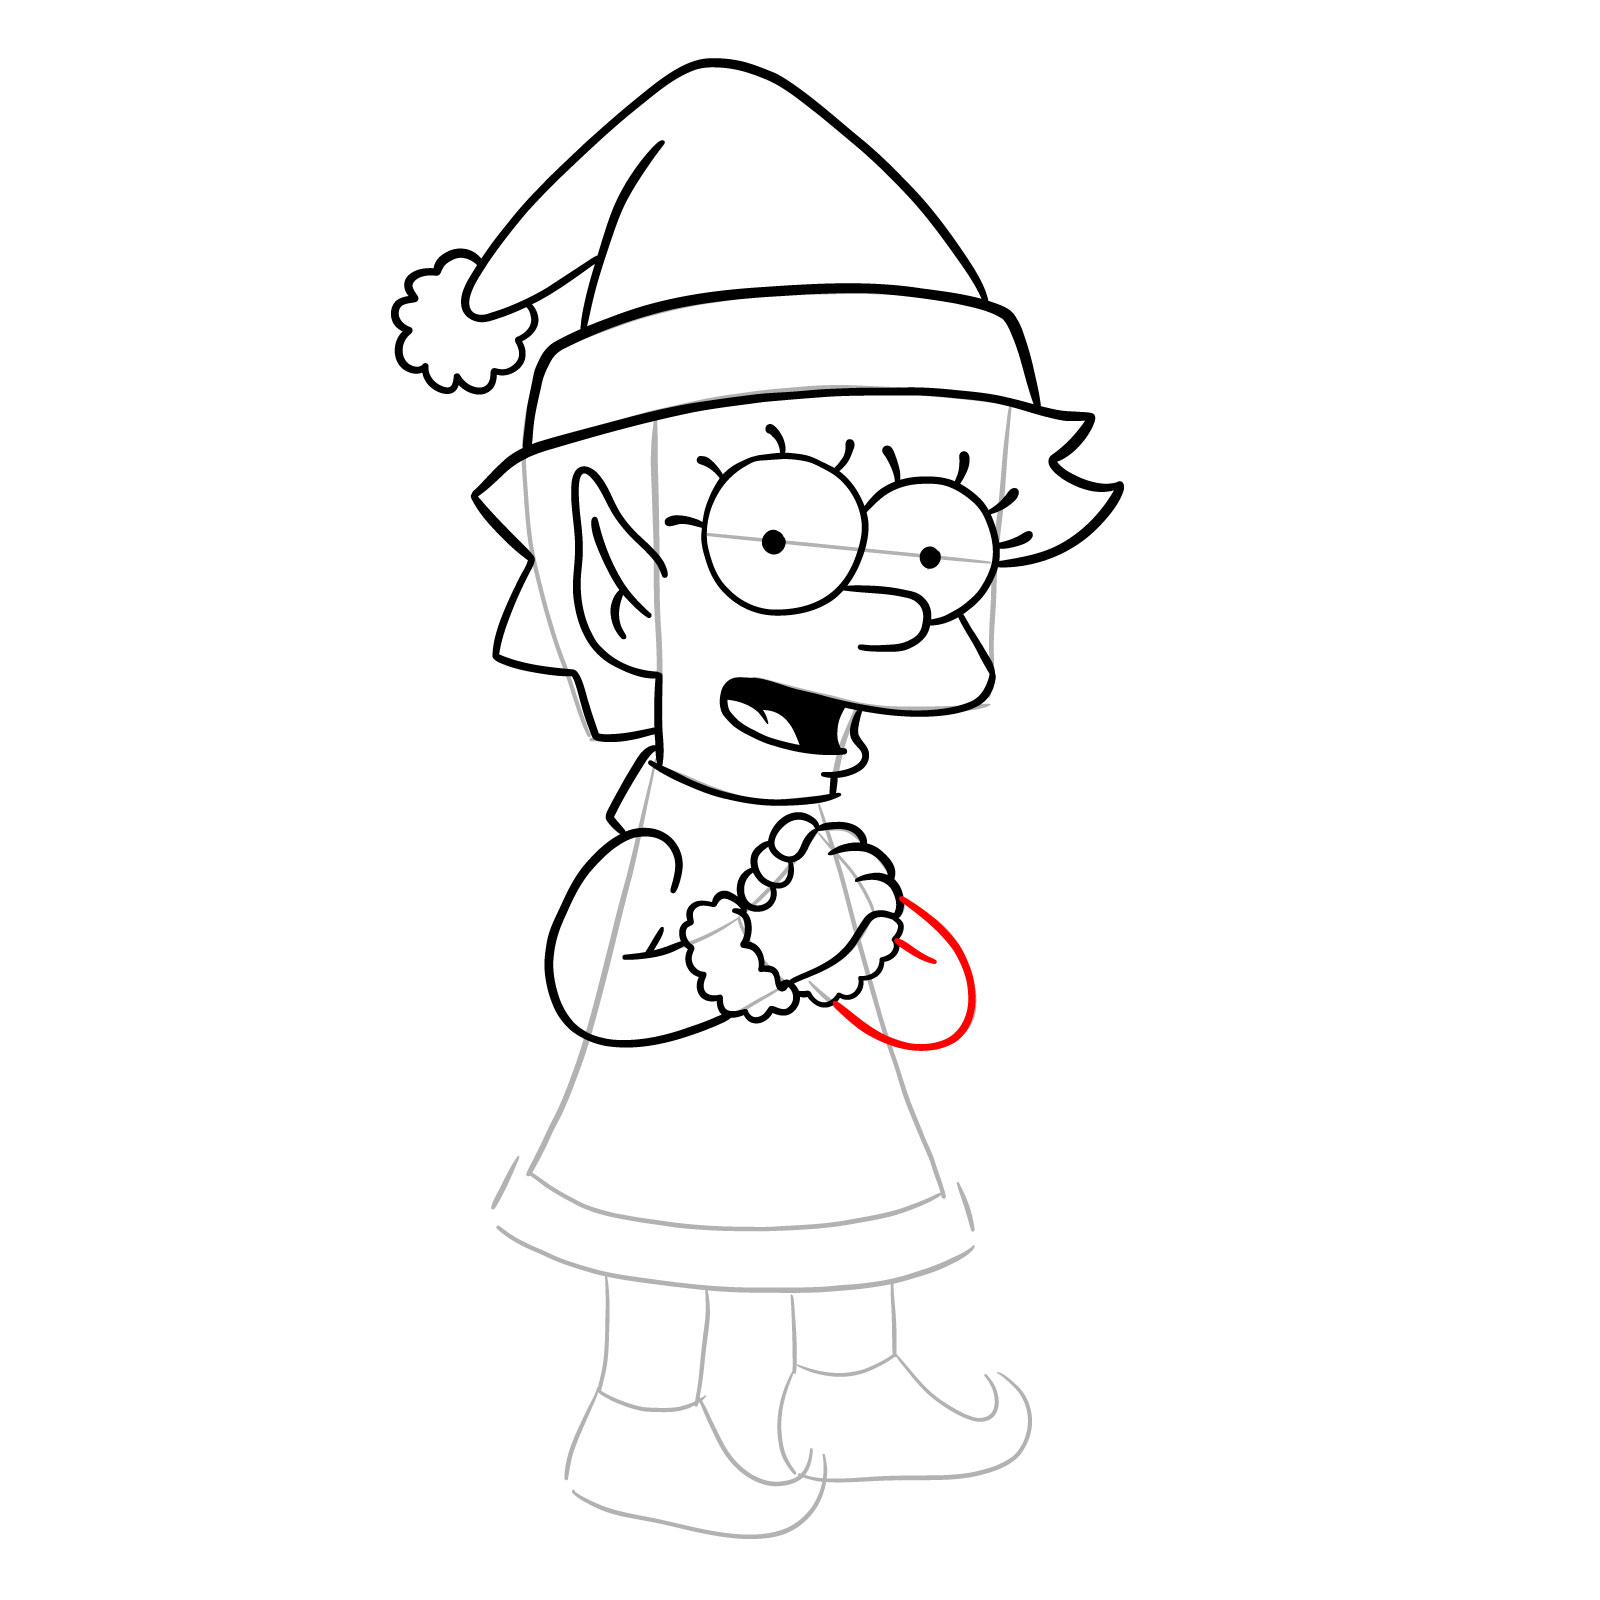 How to draw Christmas Elf Lisa Simpson - step 23